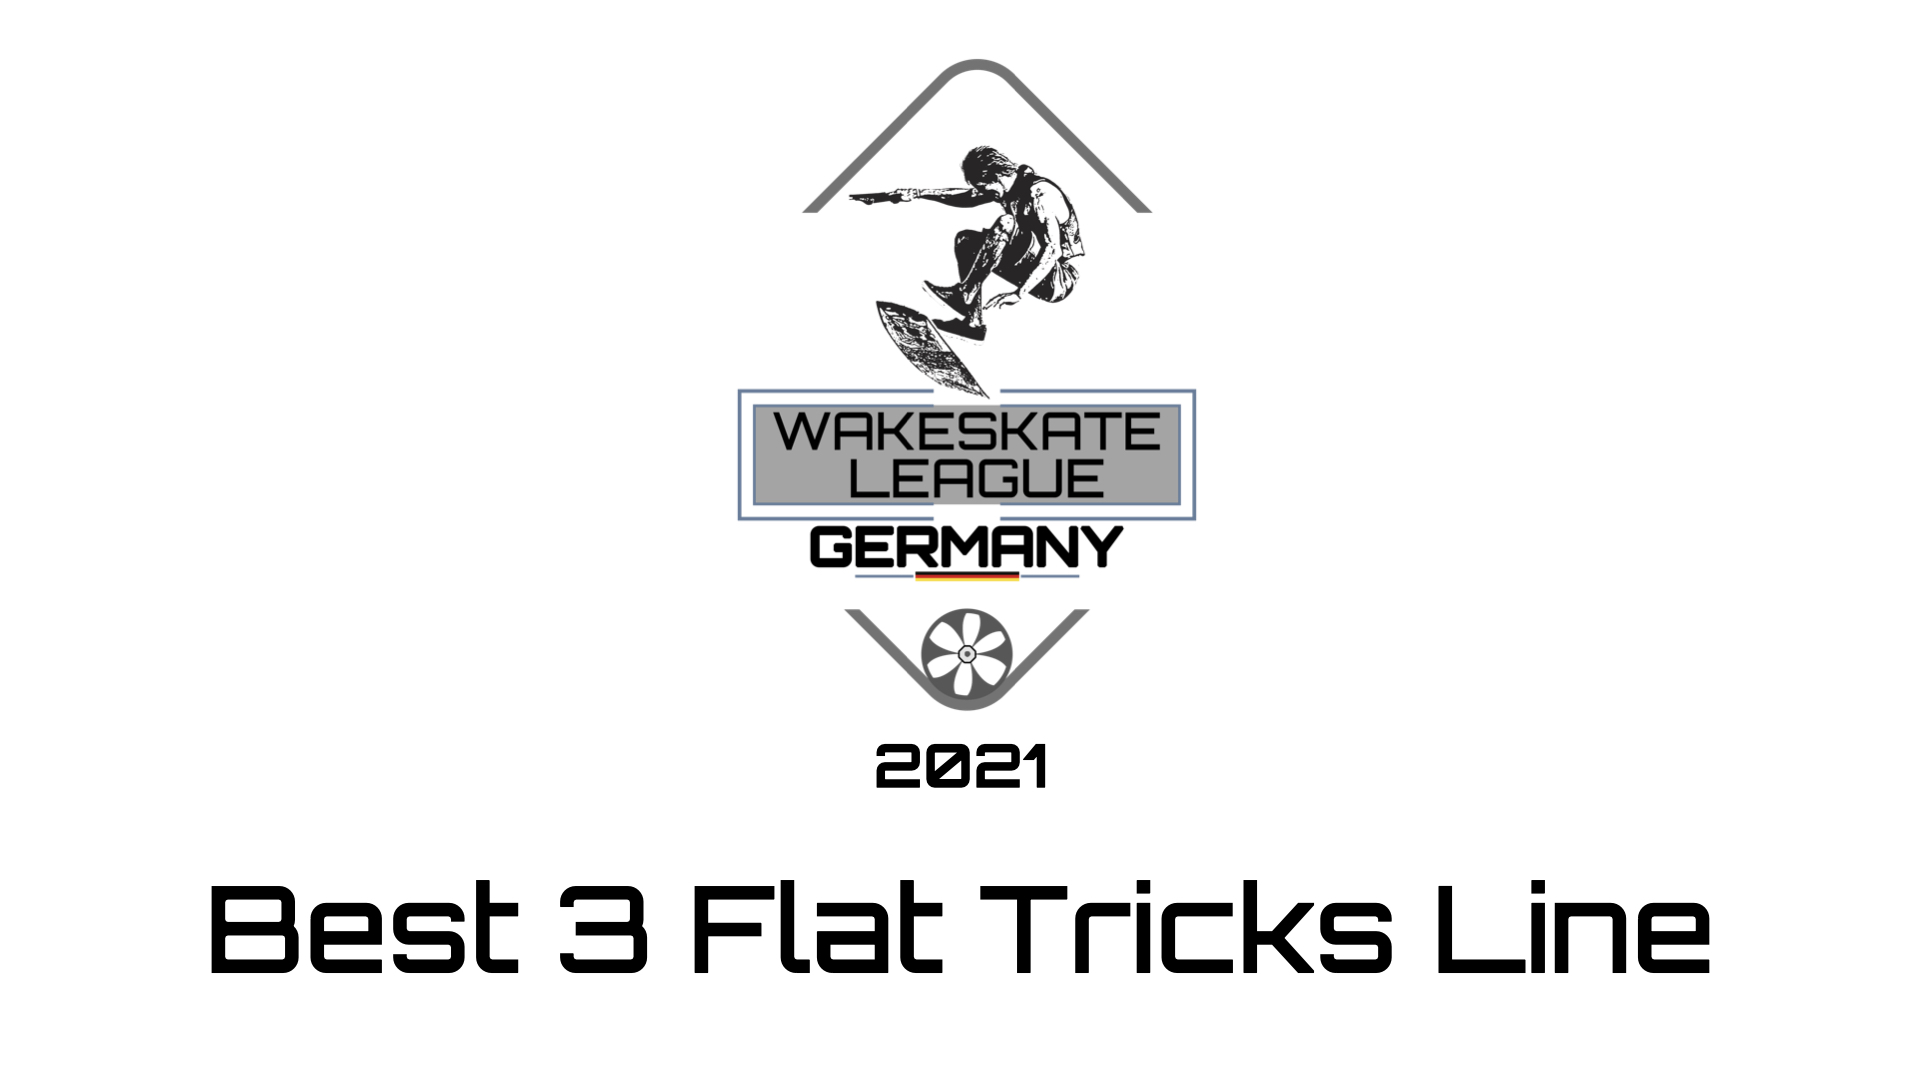 Wakeskate League Germany 2021 - #5 Best 3 Flat Tricks Line